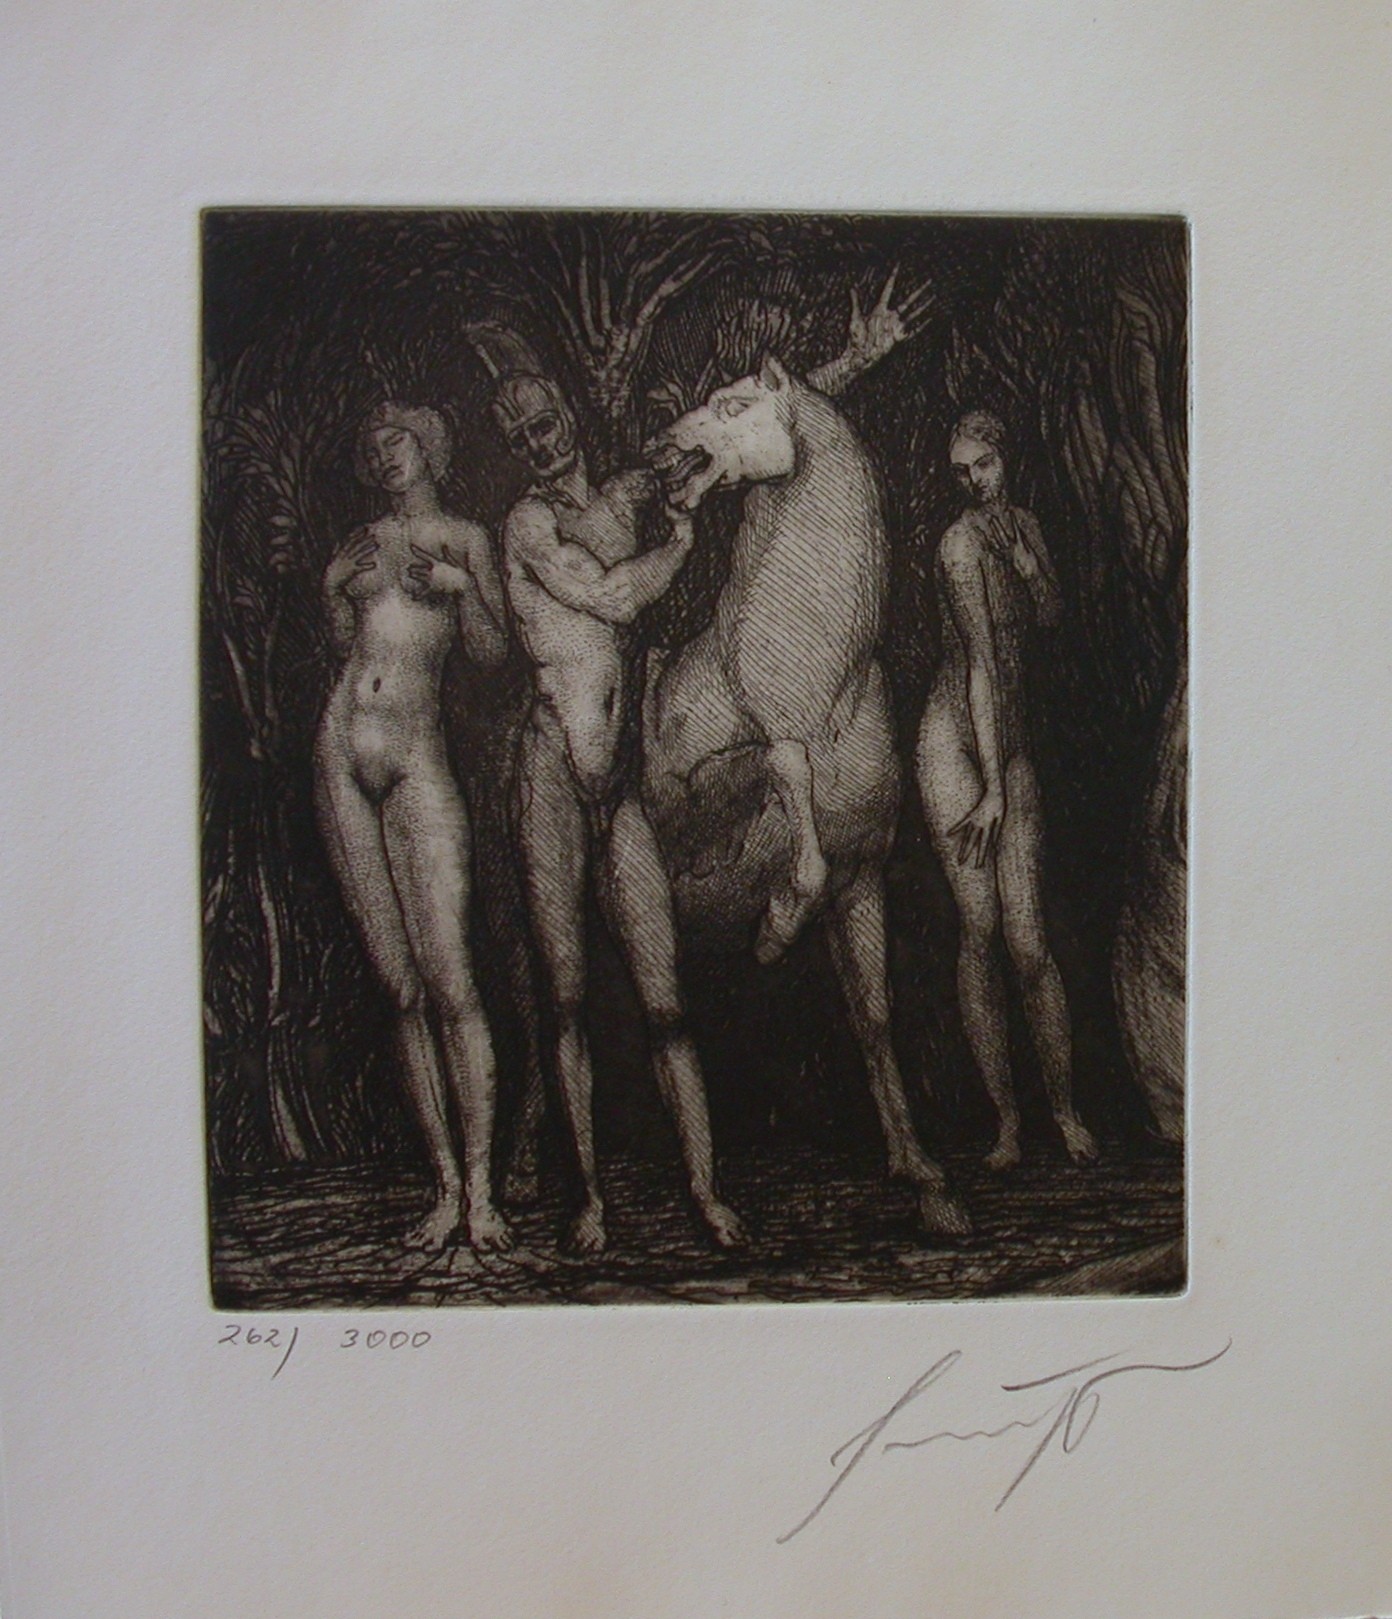  Fuchs (1930 - 2015) "Mythologische Szene"